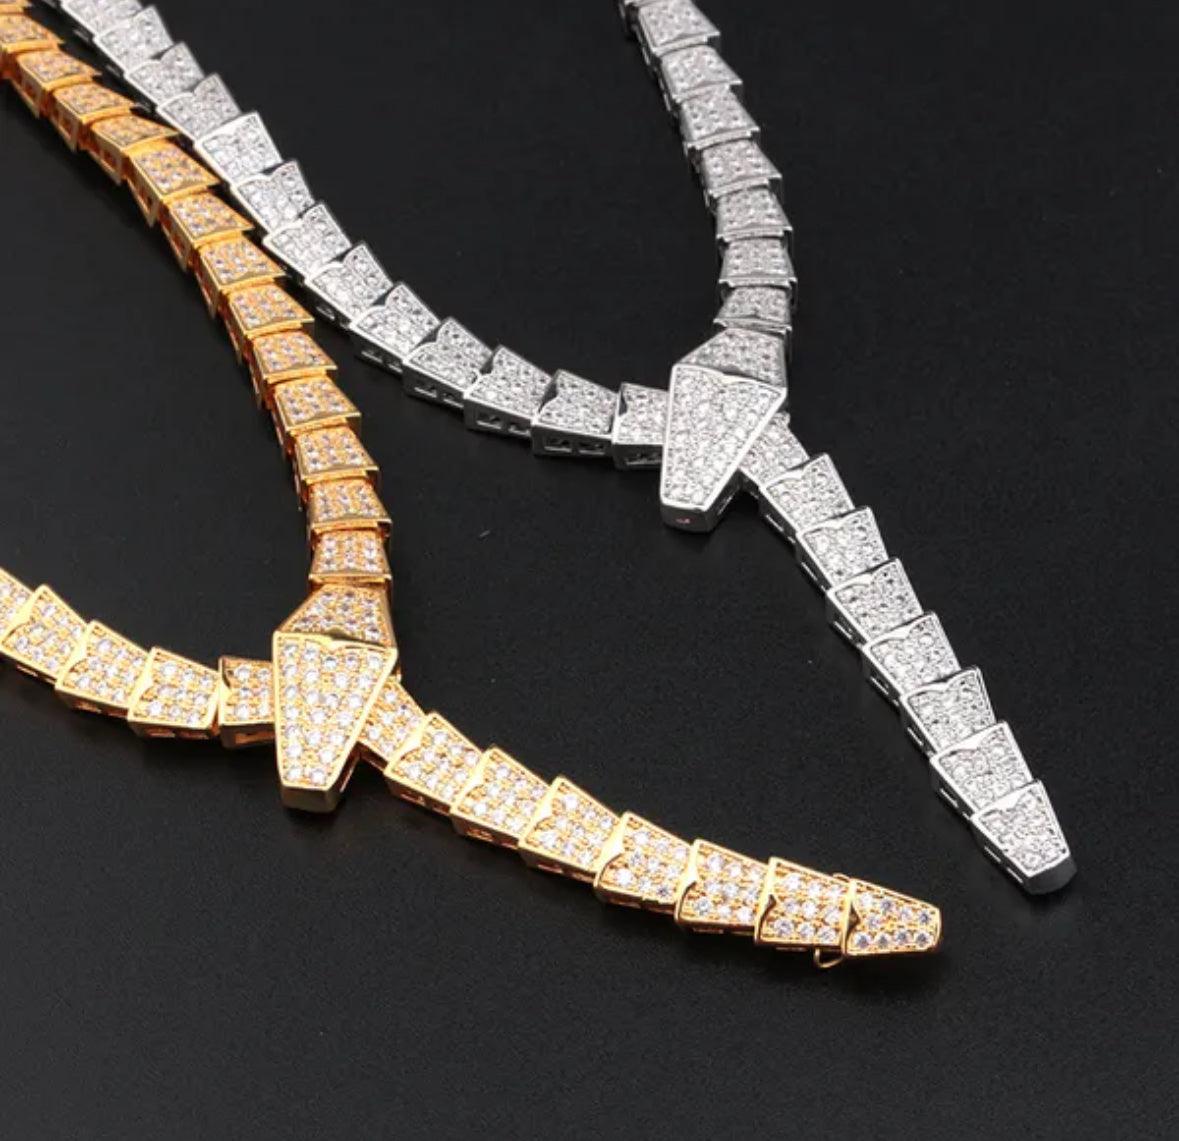 BVLGARI SERPENTI VIPER NECKLACE 18K Gold Plated Women's Jewelry GOLD-ROSE-WHITE ✨ - buyonlinebehappy